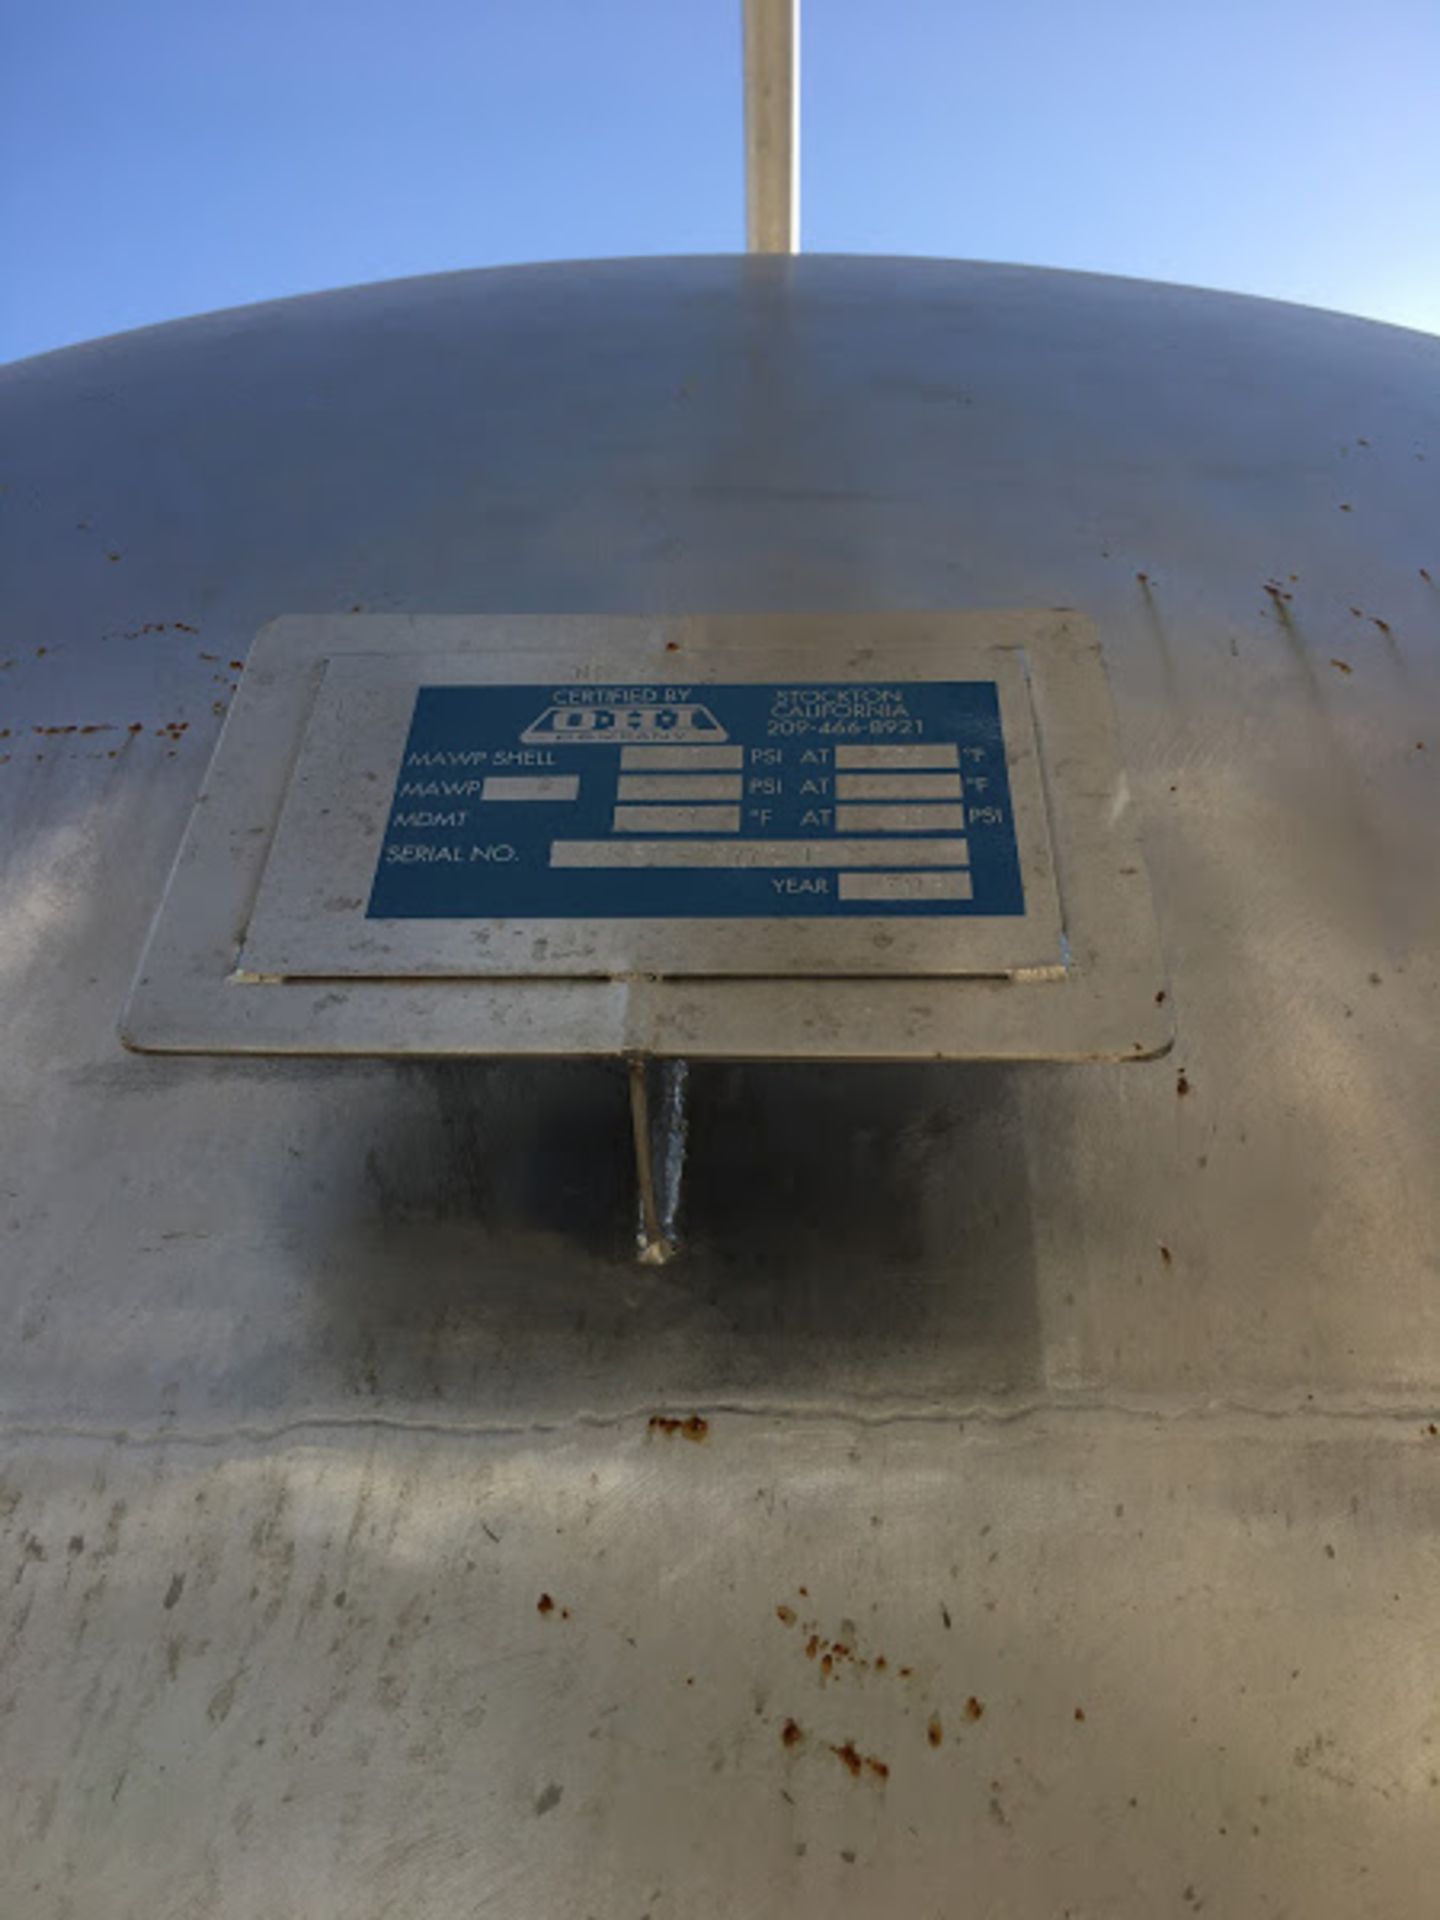 OHI Company 10,000 Gal. S/S Horizontal Ammonia Tank, S/N 23-543-29772-10, MAWP Shell 50 psi @ 205 - Image 3 of 10